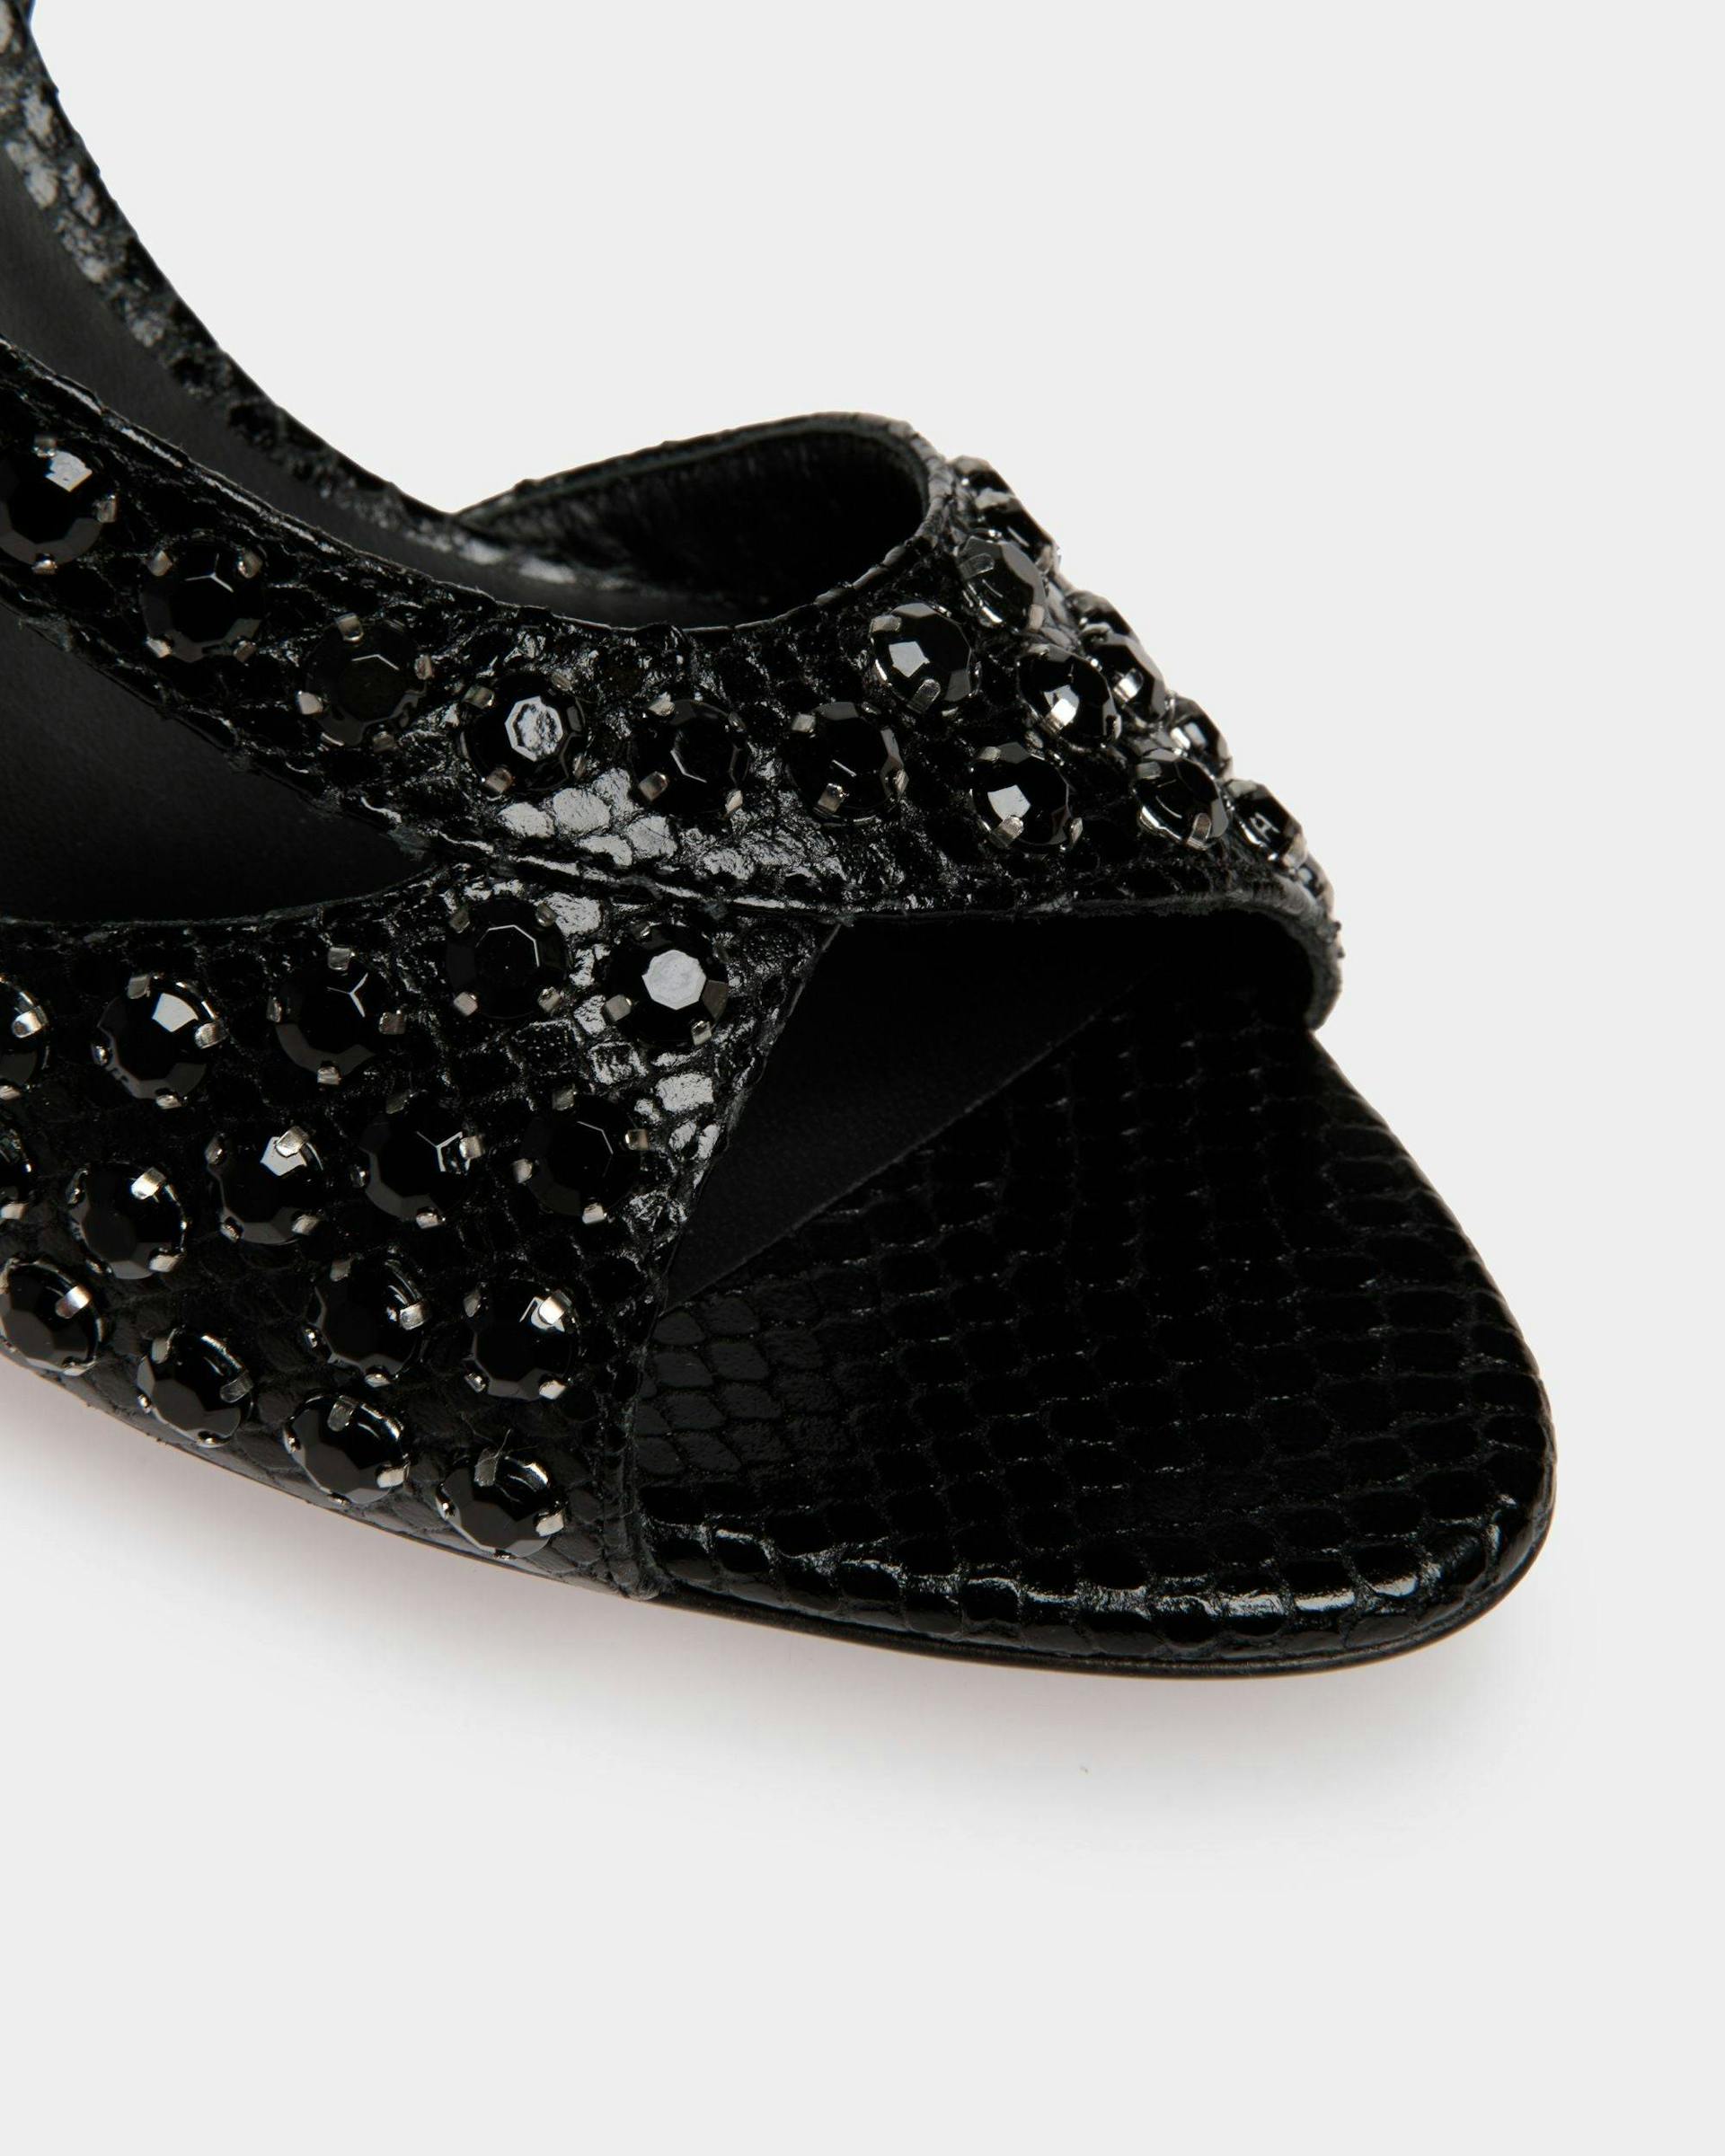 Women's Katy Heeled Sandal in Black Python Printed Leather | Bally | Still Life Detail